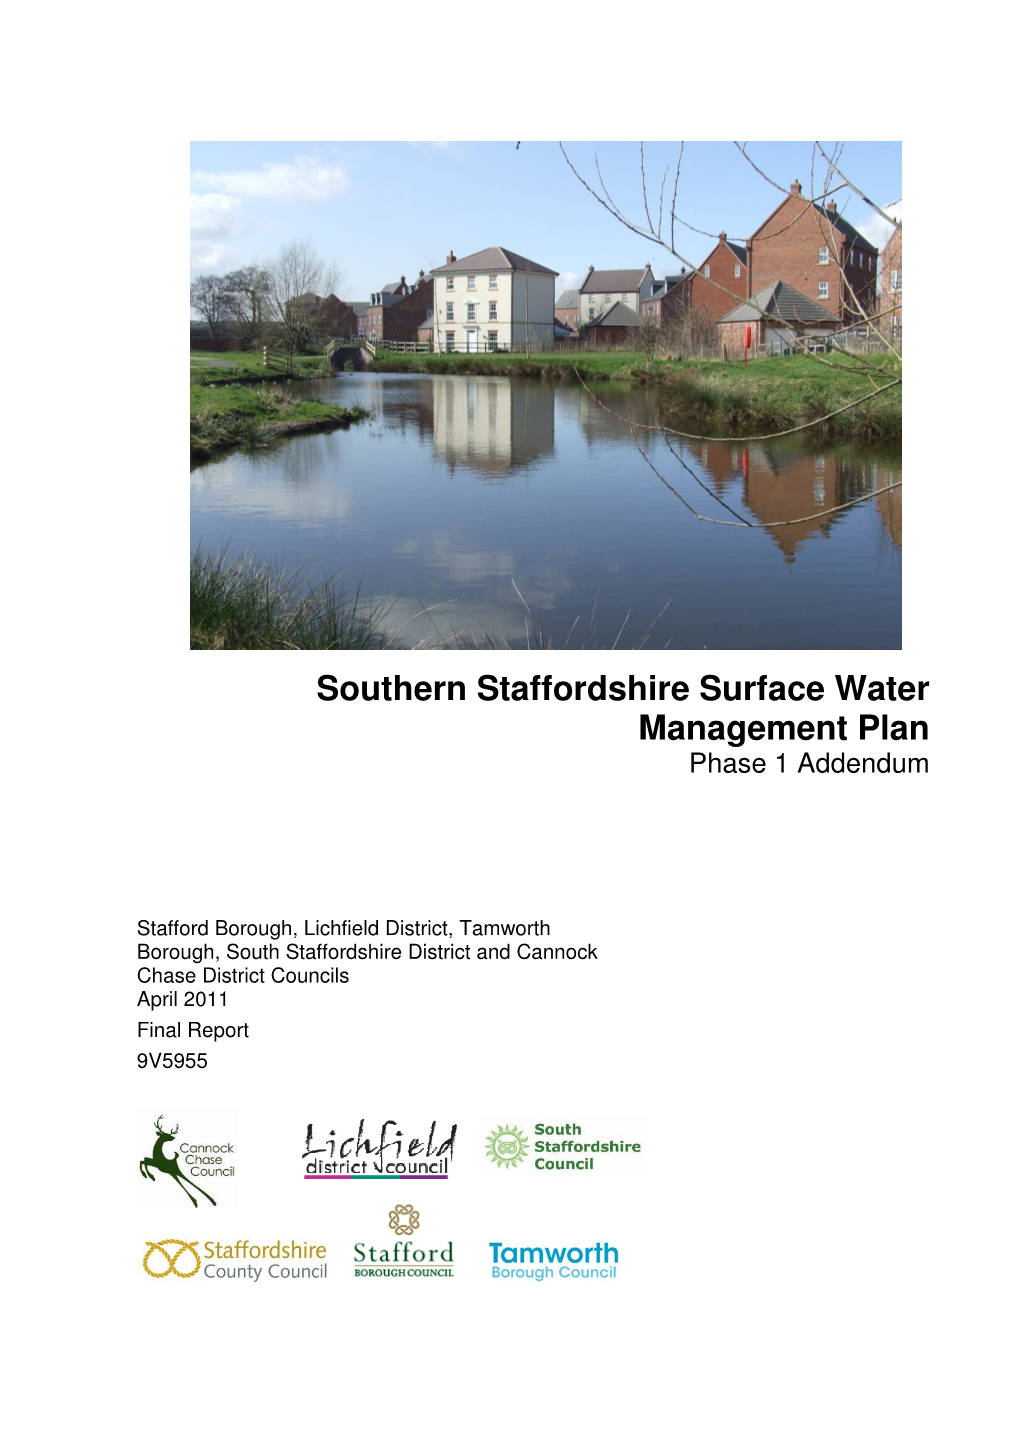 Southern Staffordshire Surface Water Management Plan Phase 1 Addendum